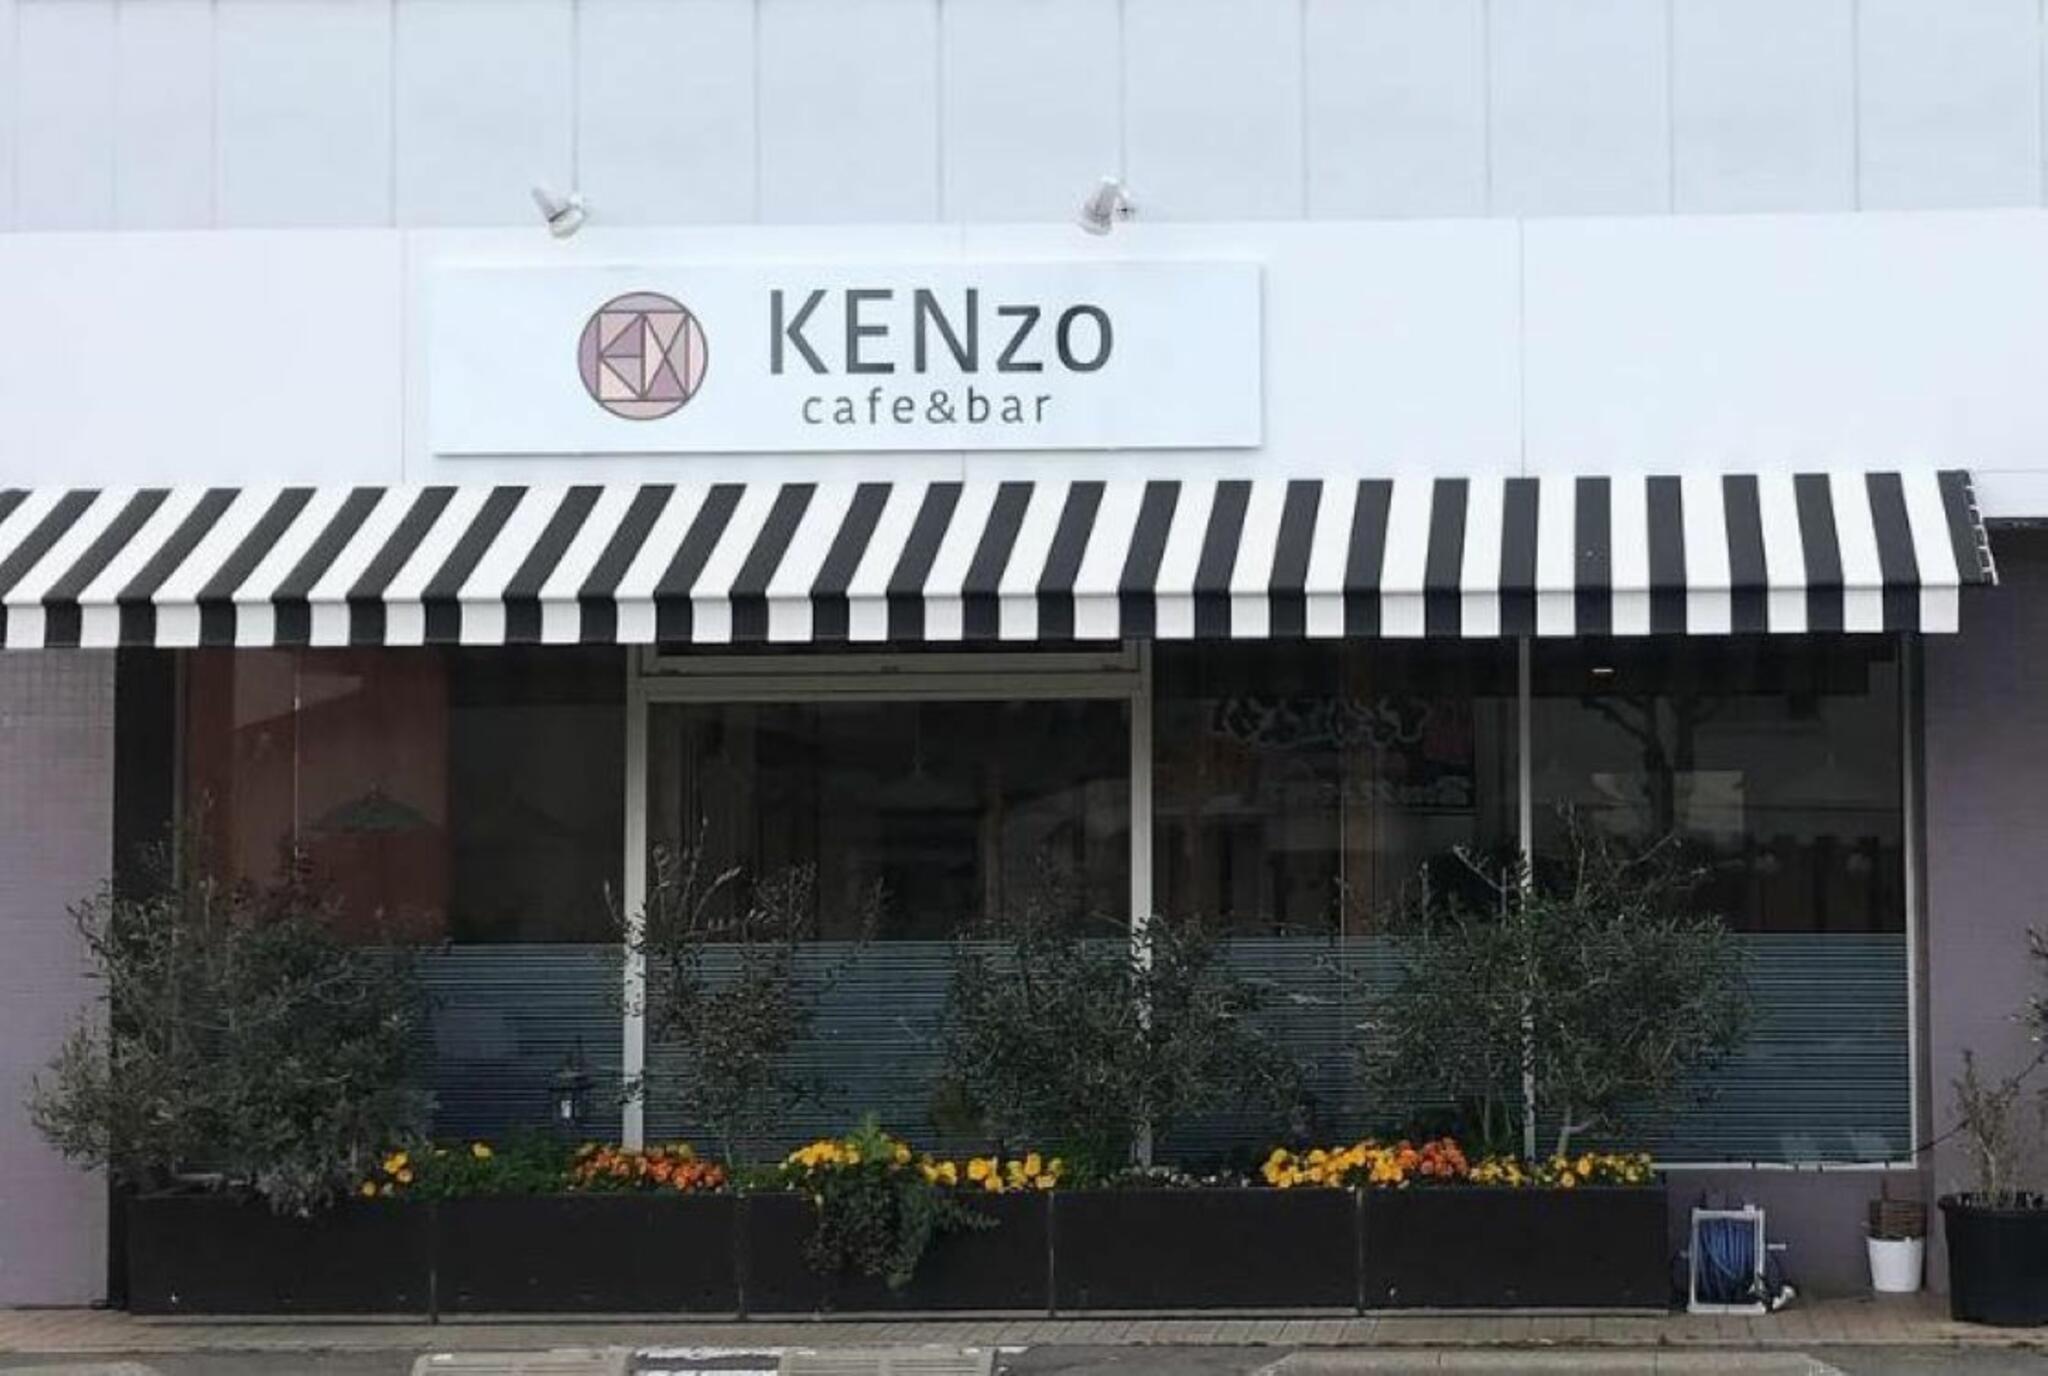 KENzo  cafe＆barの代表写真3